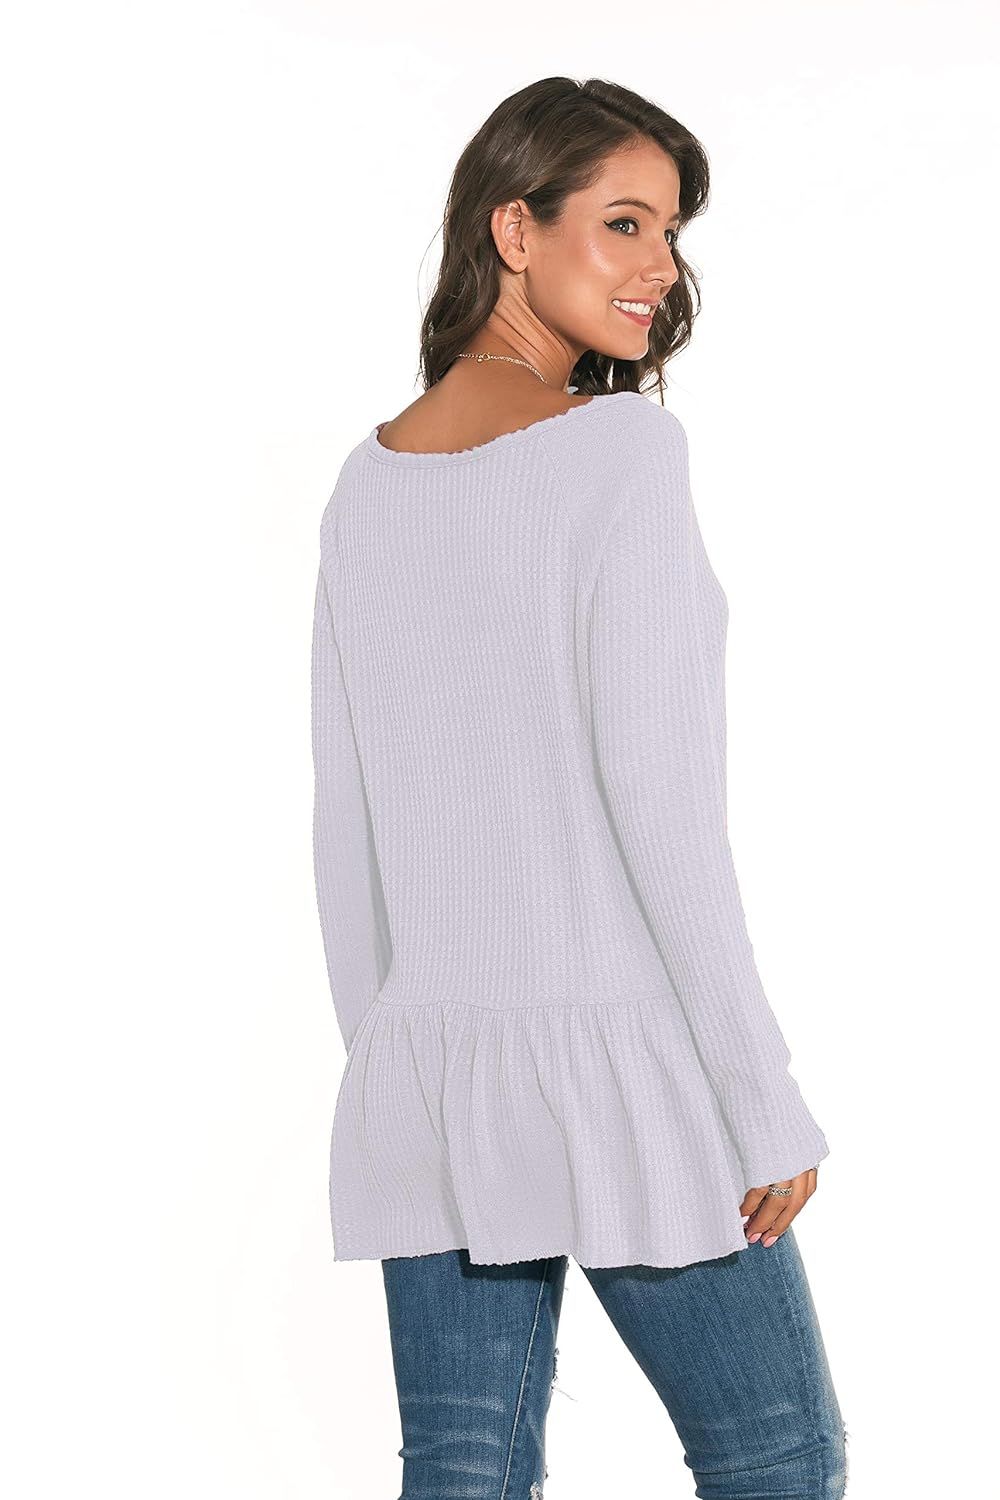 Chvity Women's Novelty Knit Sweaters V-Neck Ruffle Peplum Tops Long Sleeve Tunic Blouses | Amazon (US)